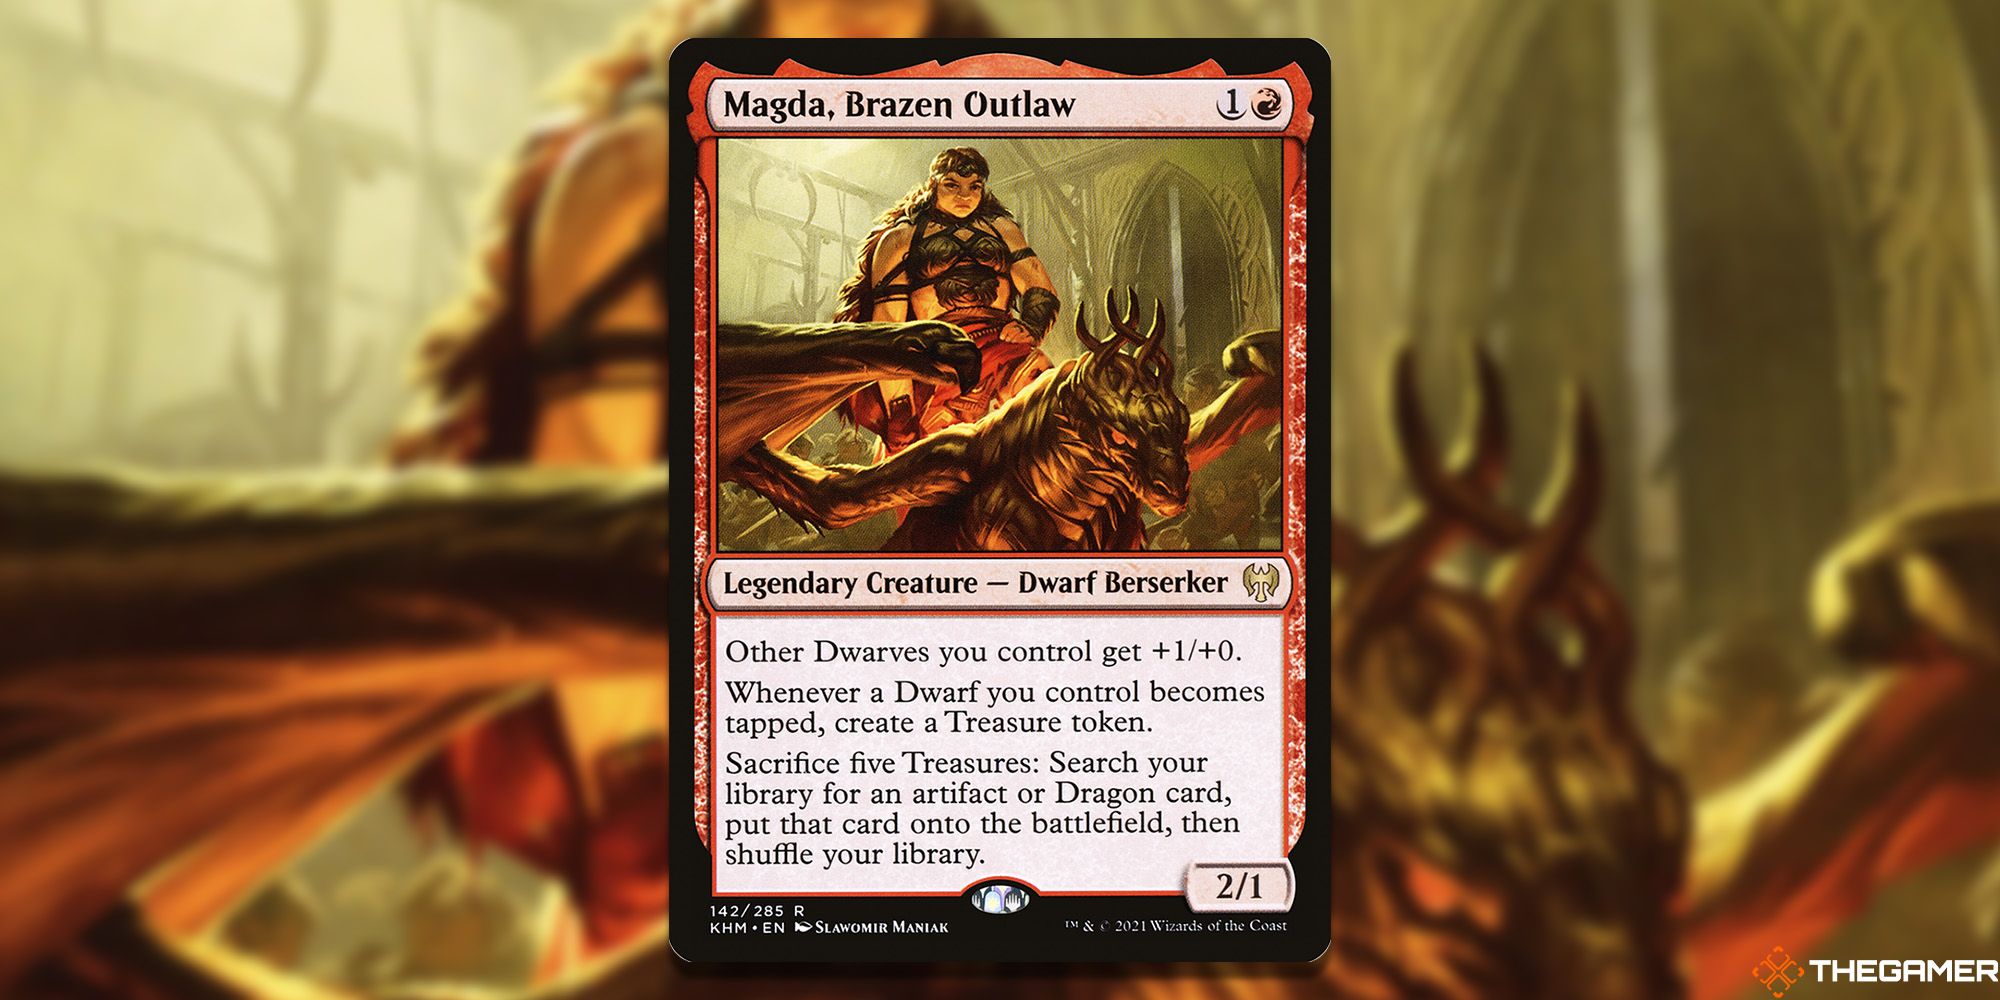 Magda, Brazen Outlaw Magic: The Gathering card overlaid over artwork.